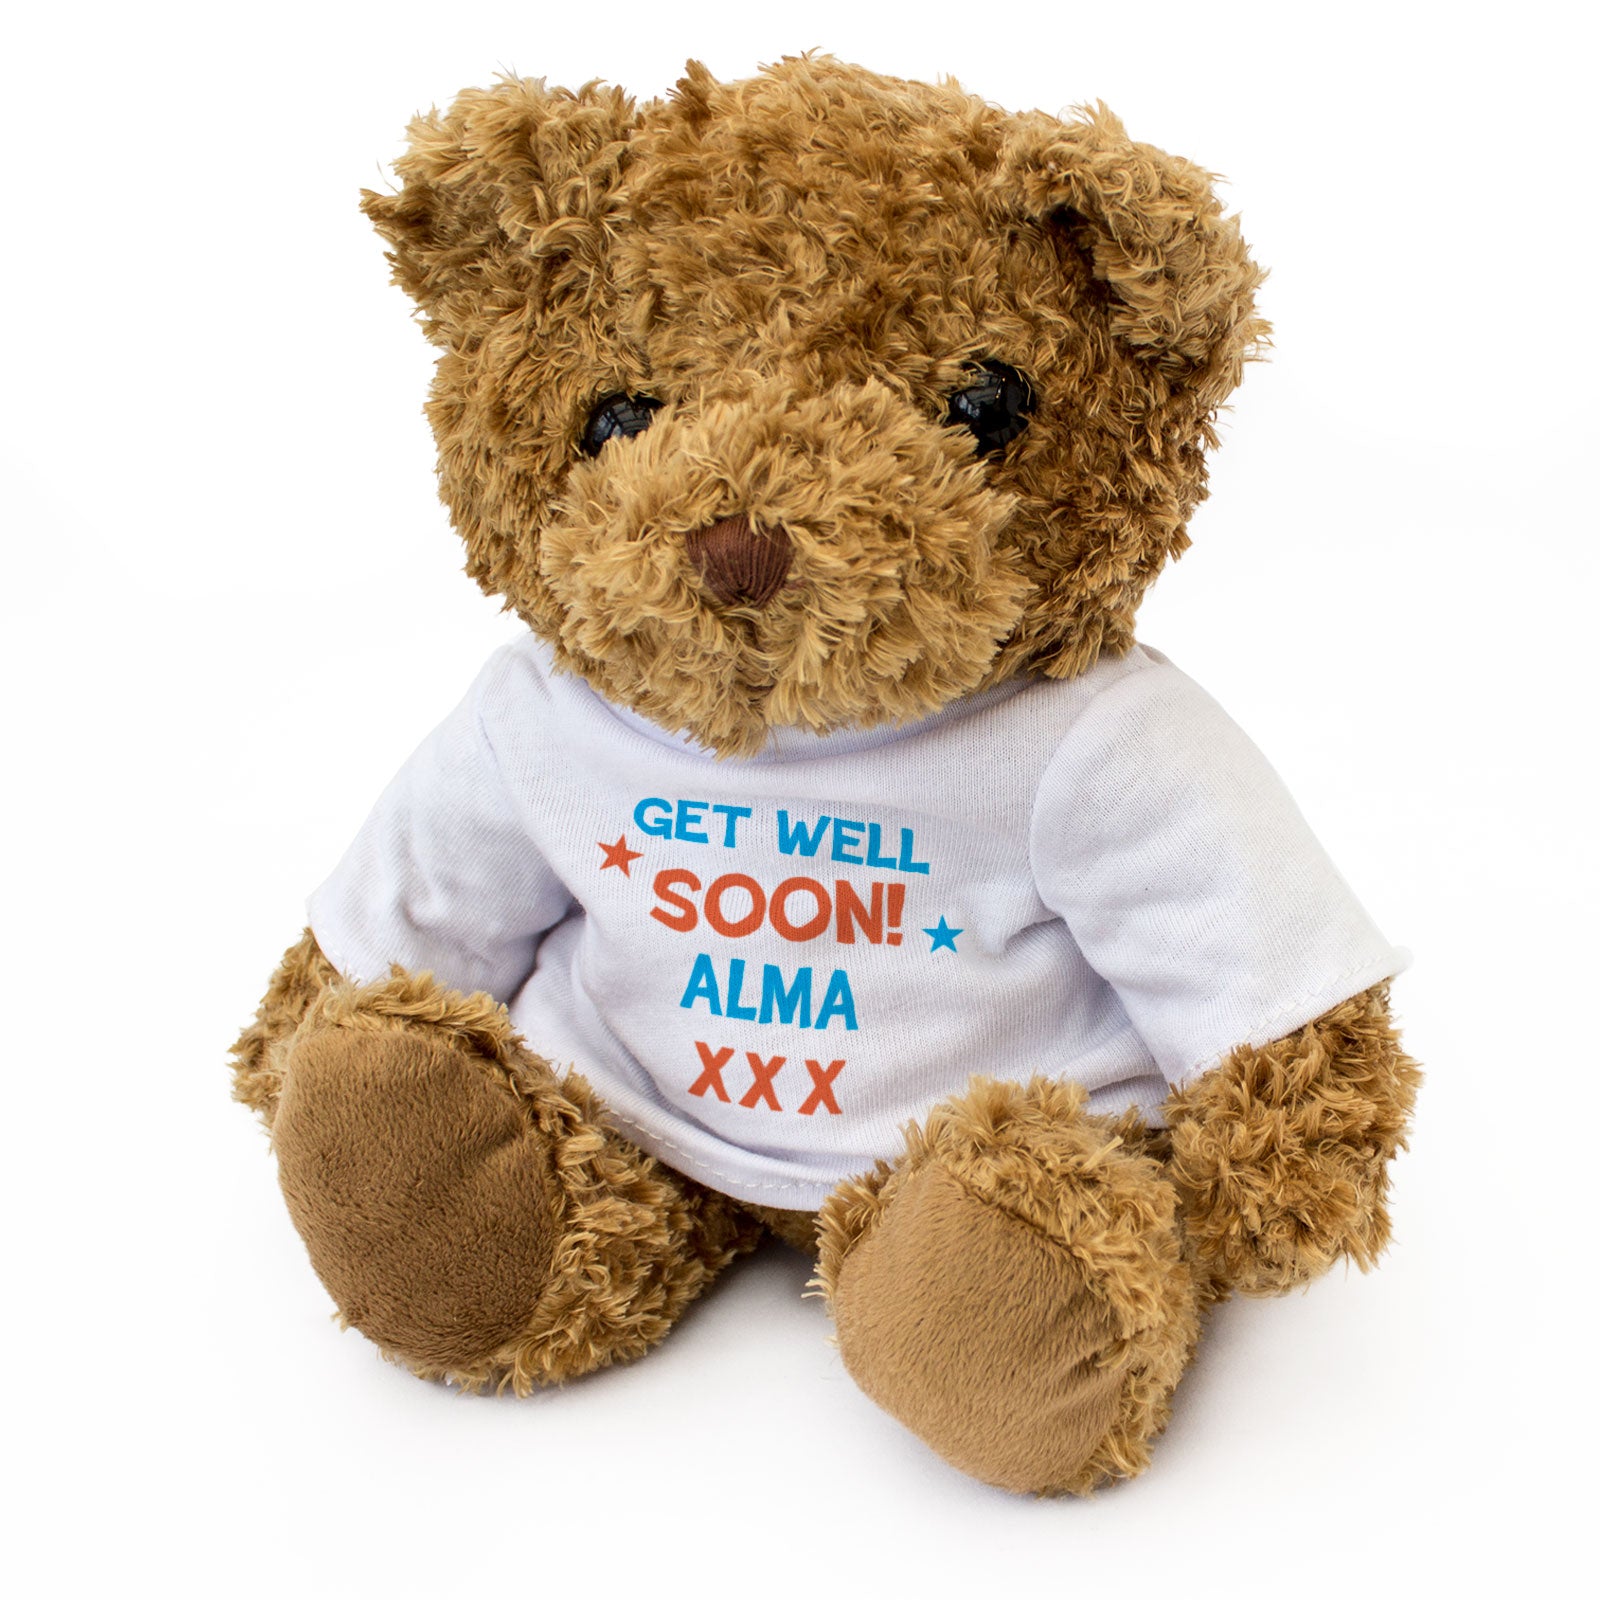 Get Well Soon Alma - Teddy Bear